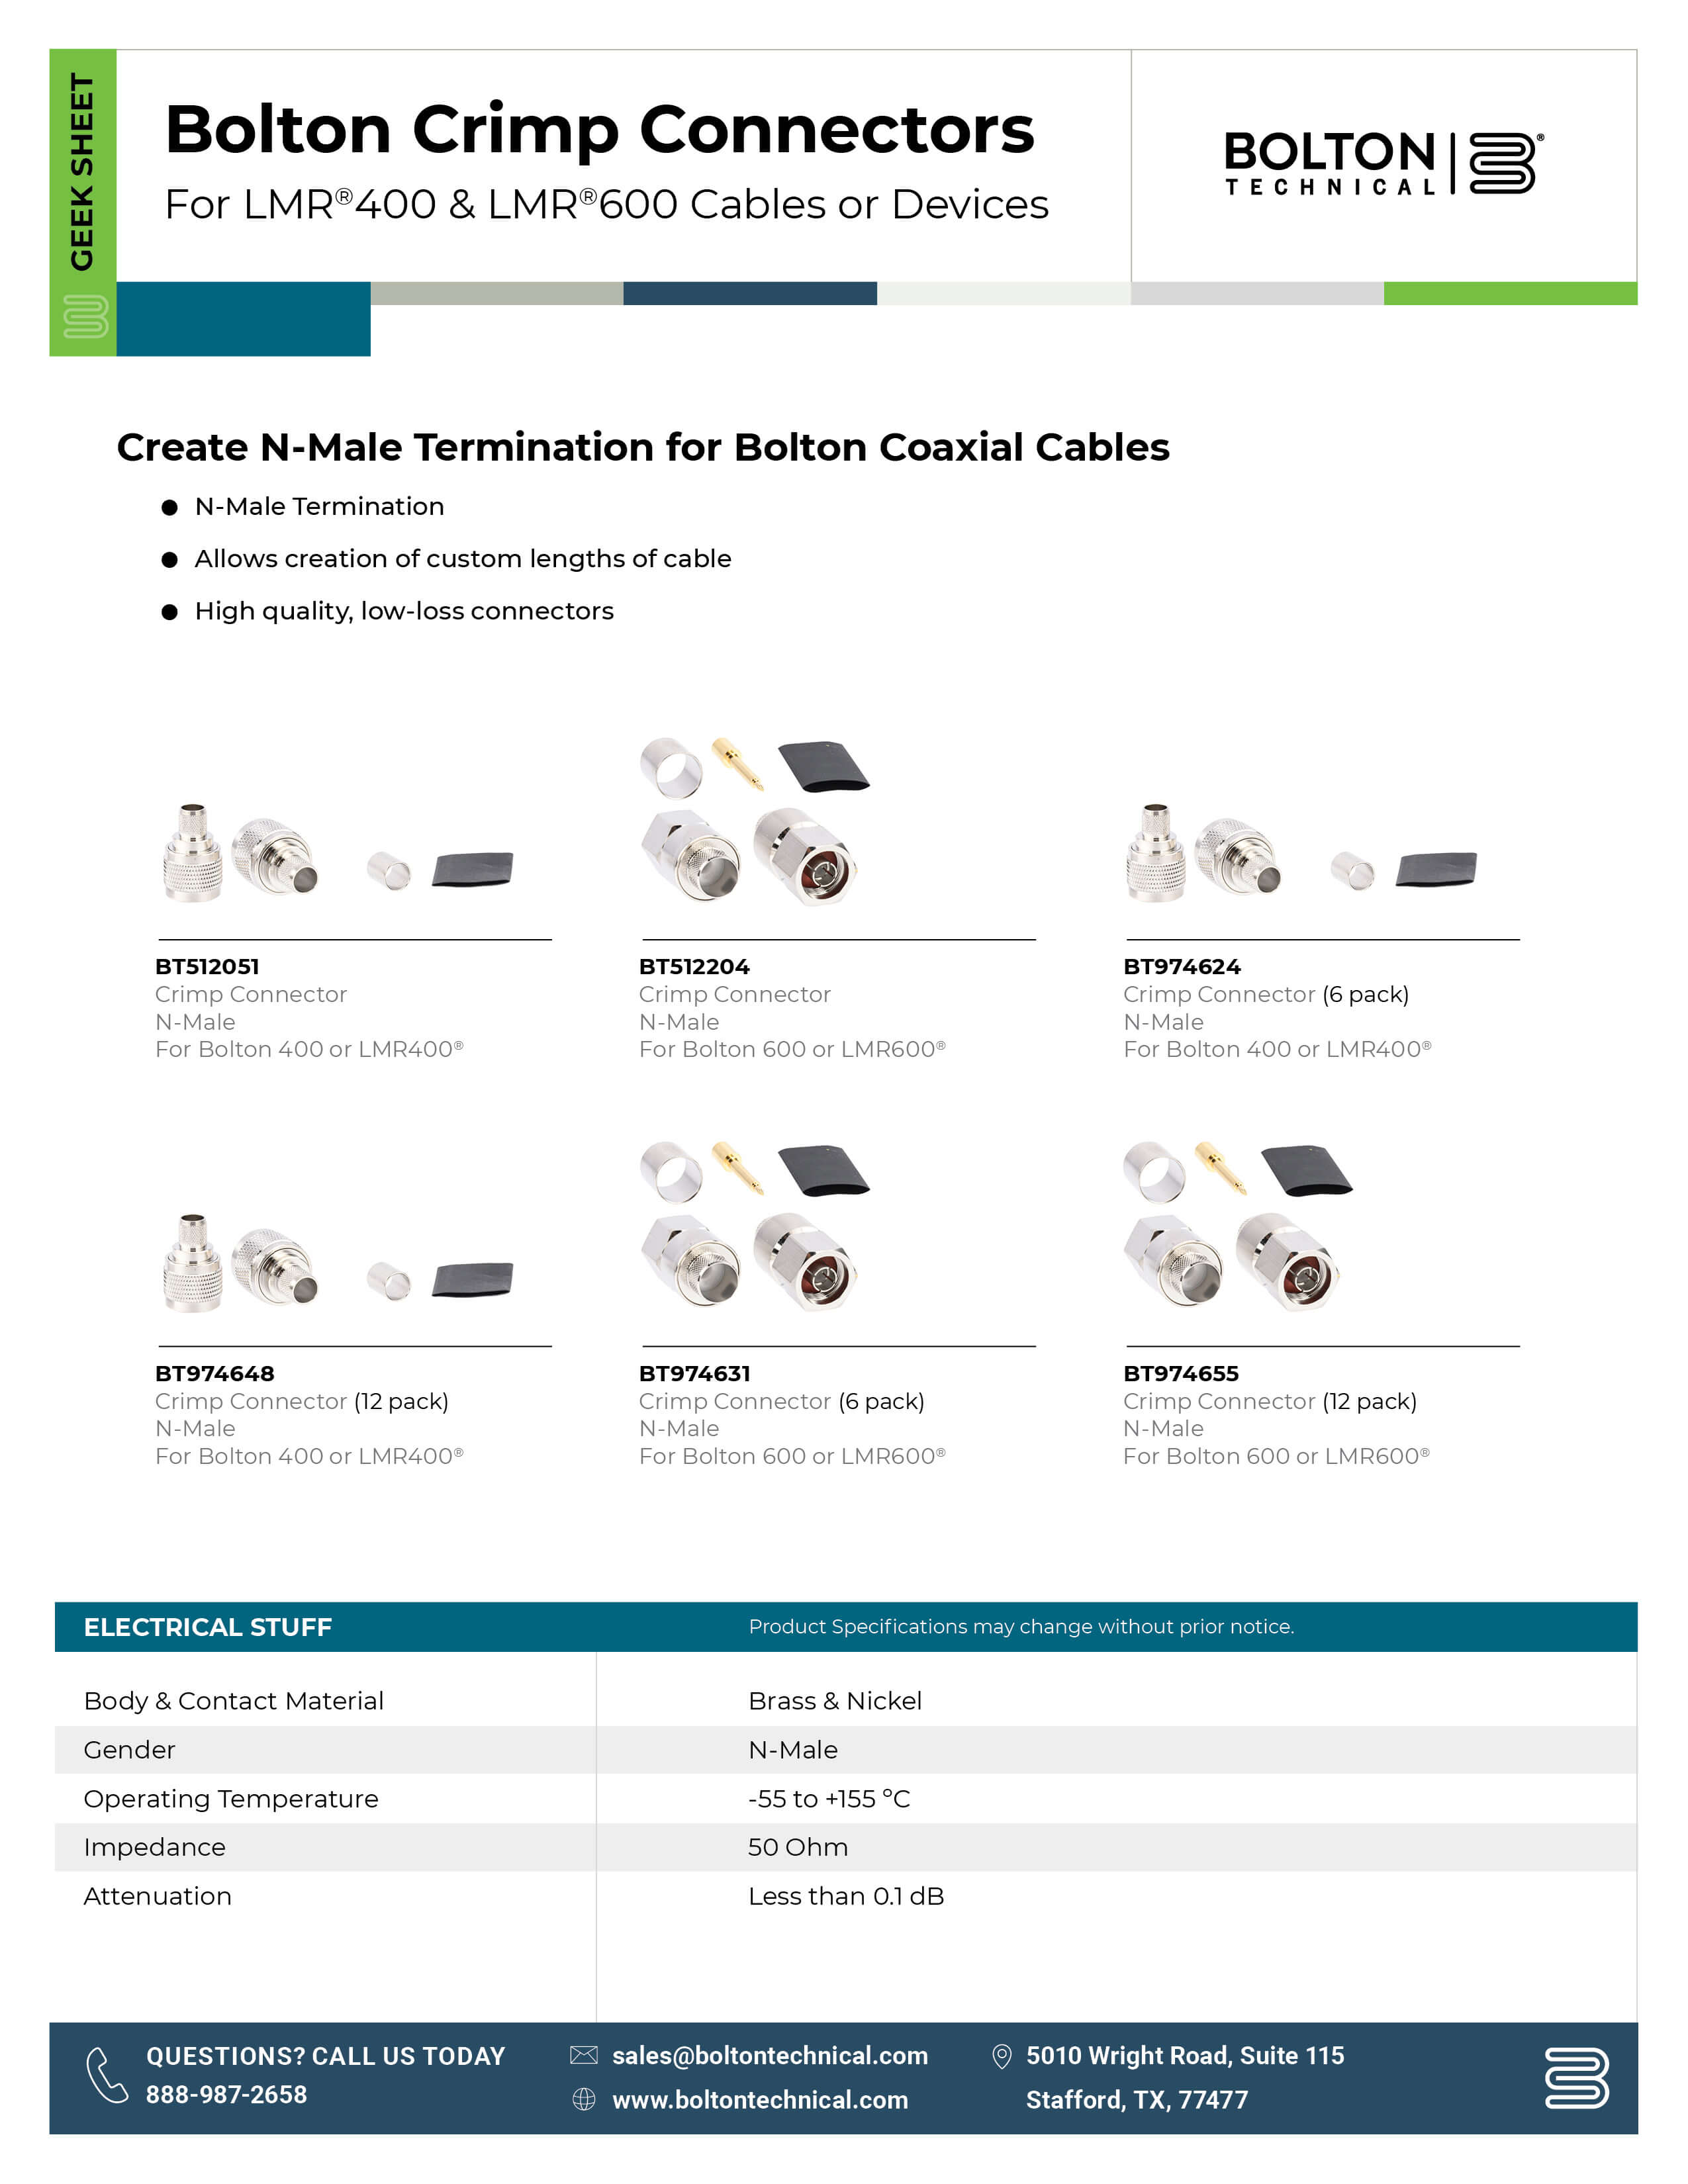 bolton crimp connector specifications